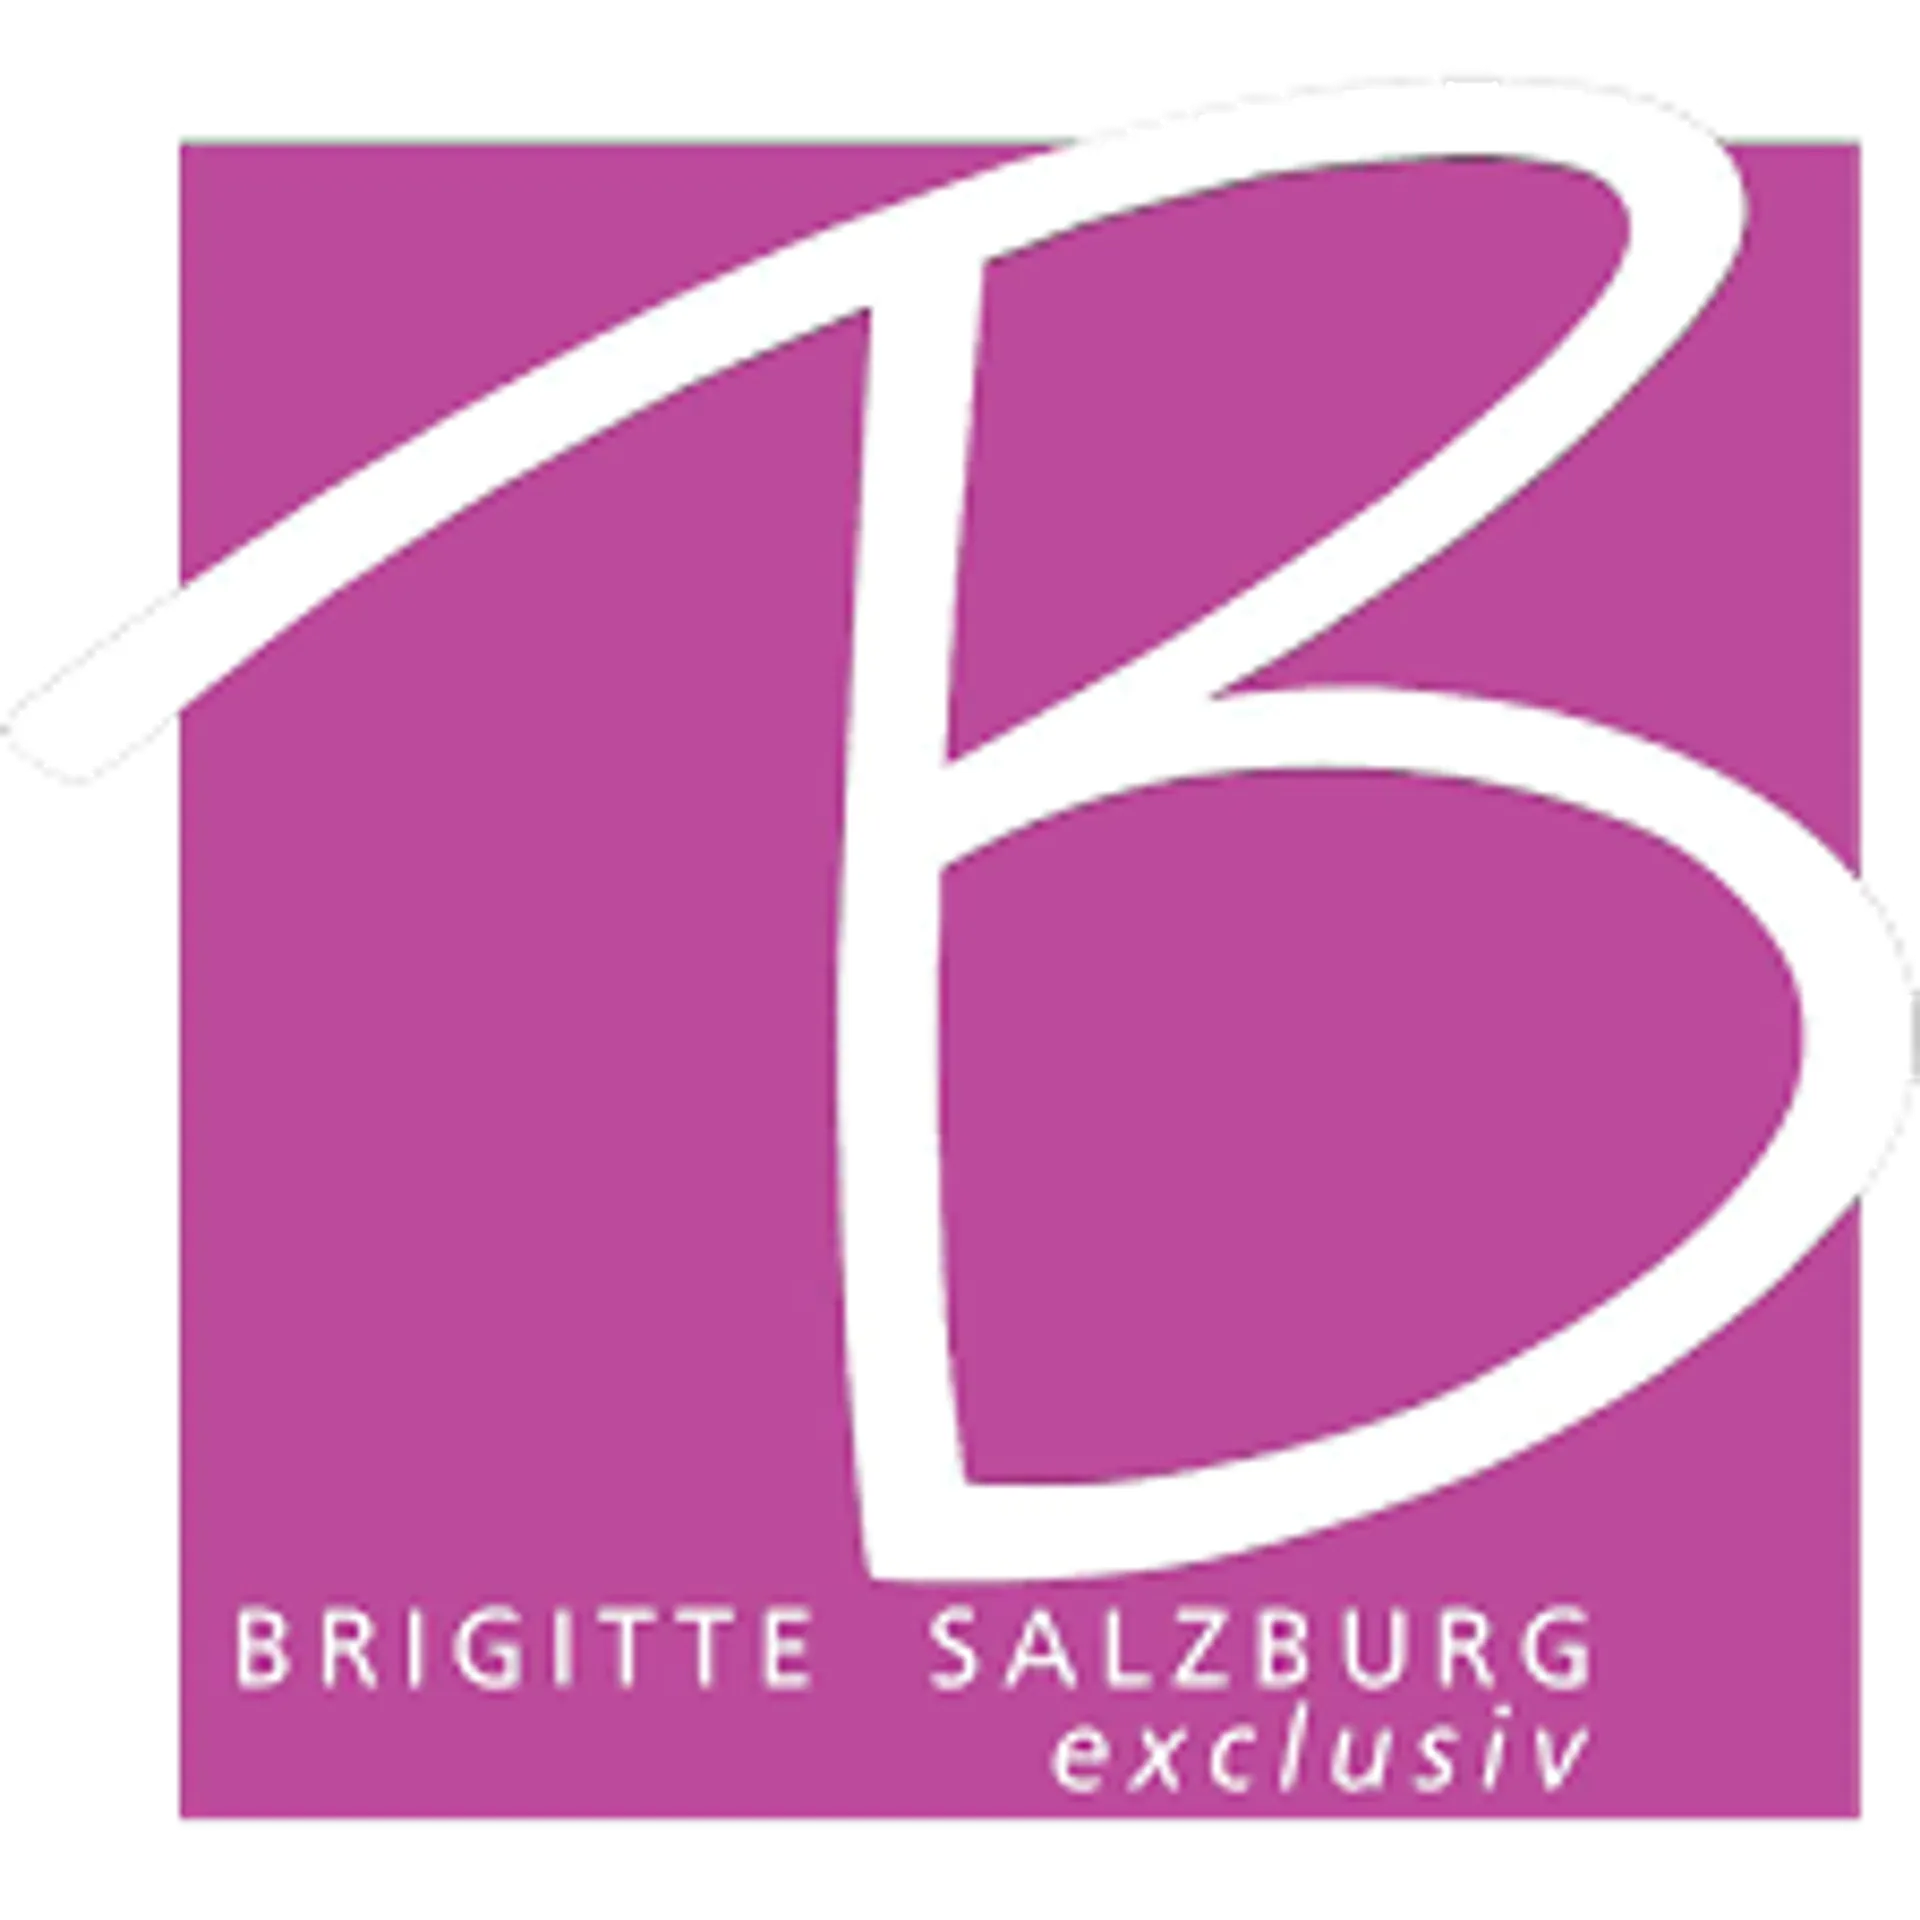 BRIGITTE SALZBURG logo die aktuell Flugblatt